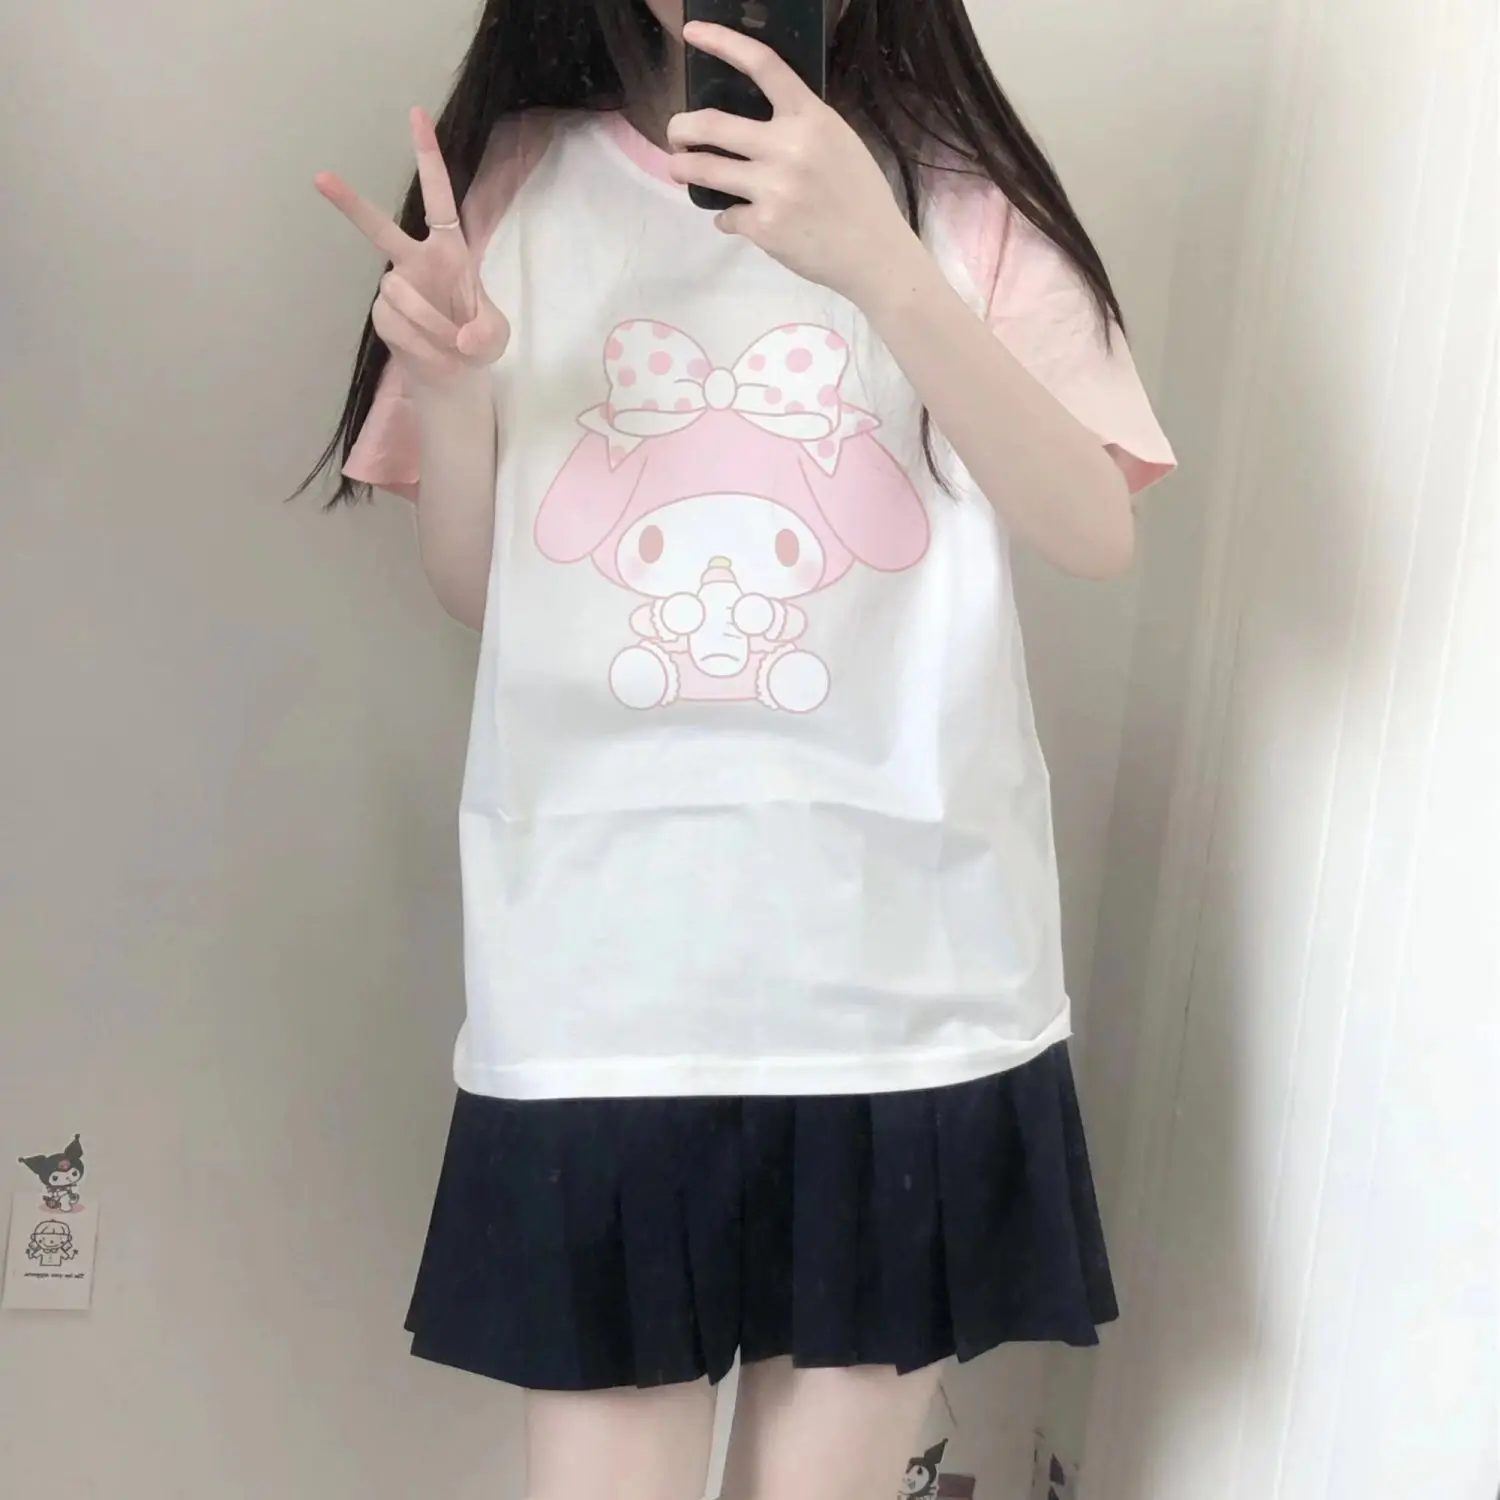 Sanrios Kawaii Anime My Melody Cute Cartoon Short sleeved T shirt Women Summer New Color Matching 1 - My Melody Plush